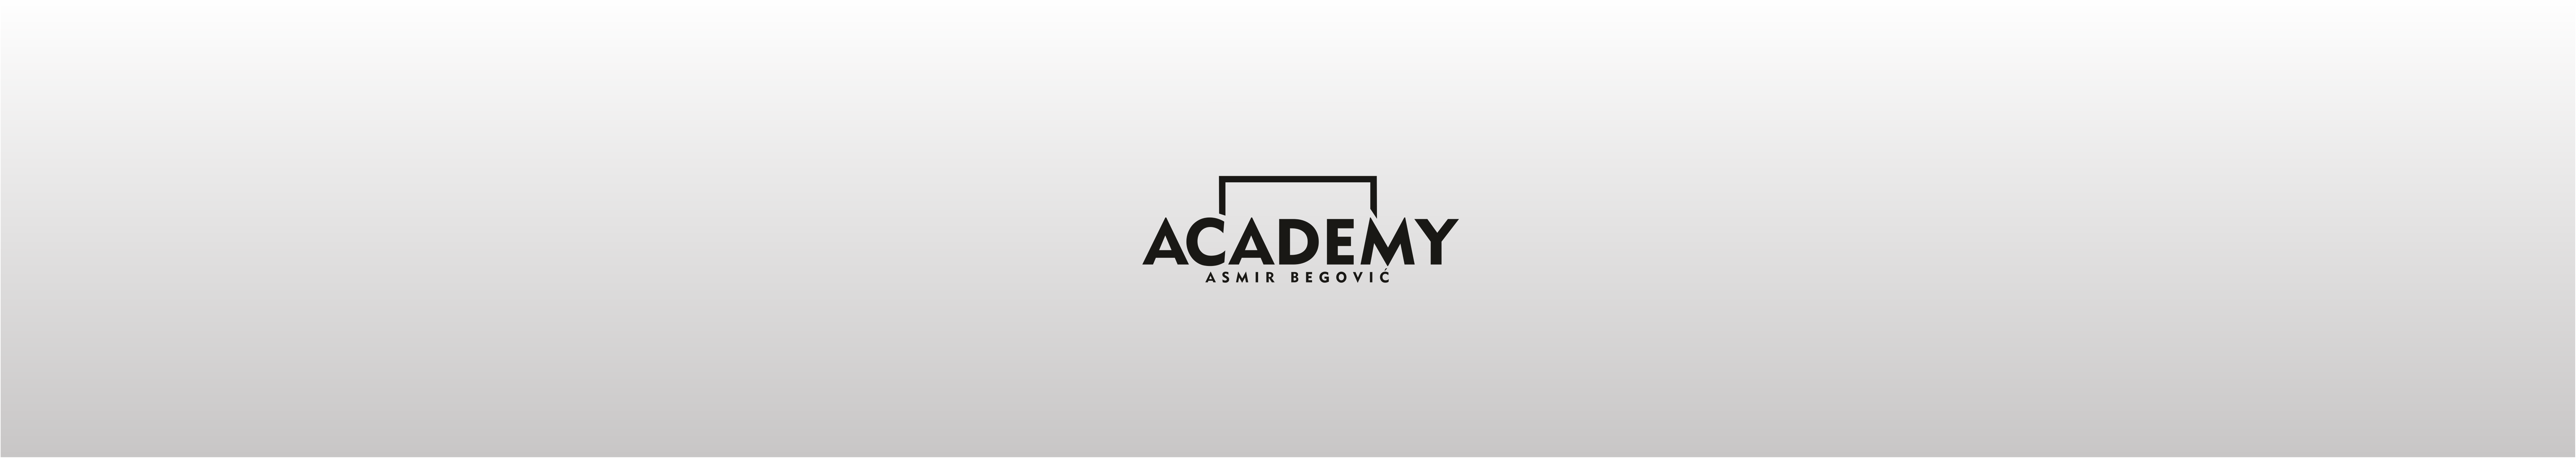 Asmir Begovic Academy